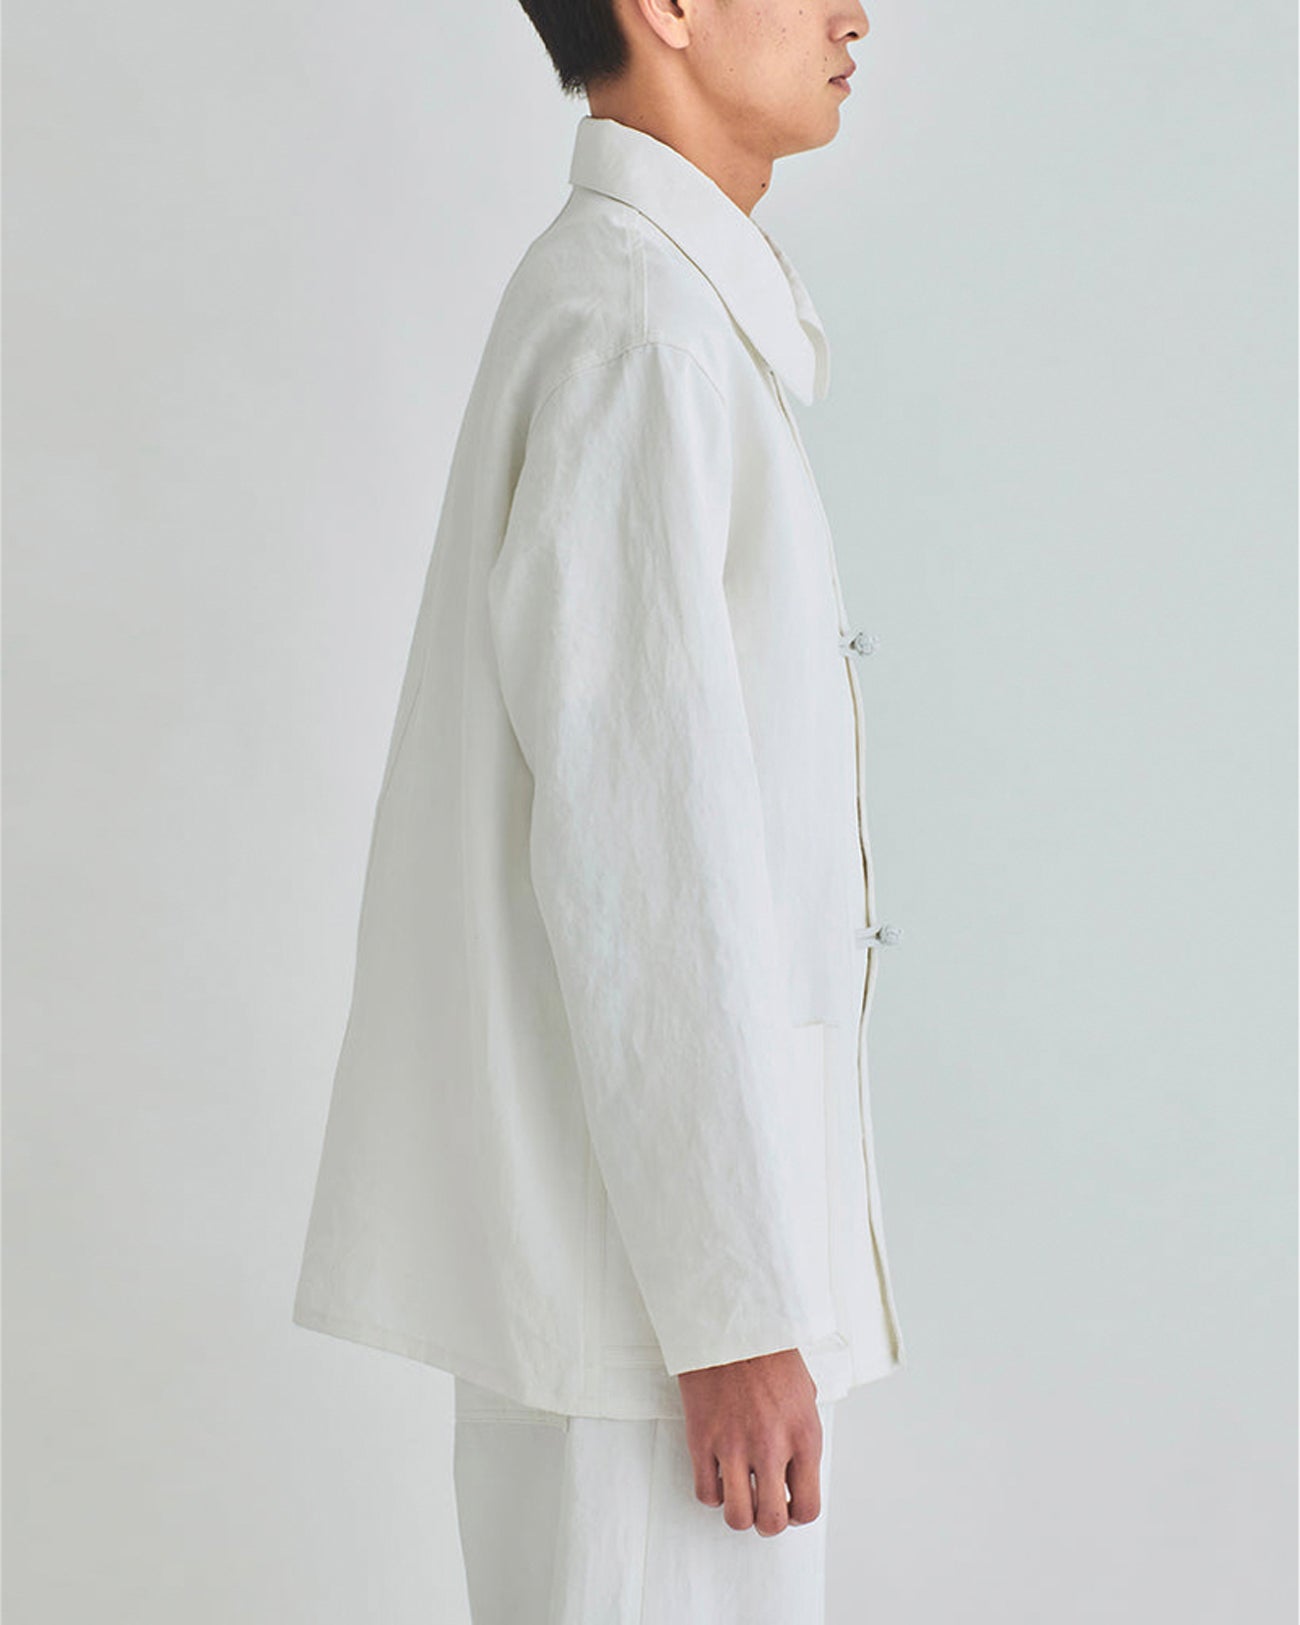 Linen Pigment Chinese JKT - white